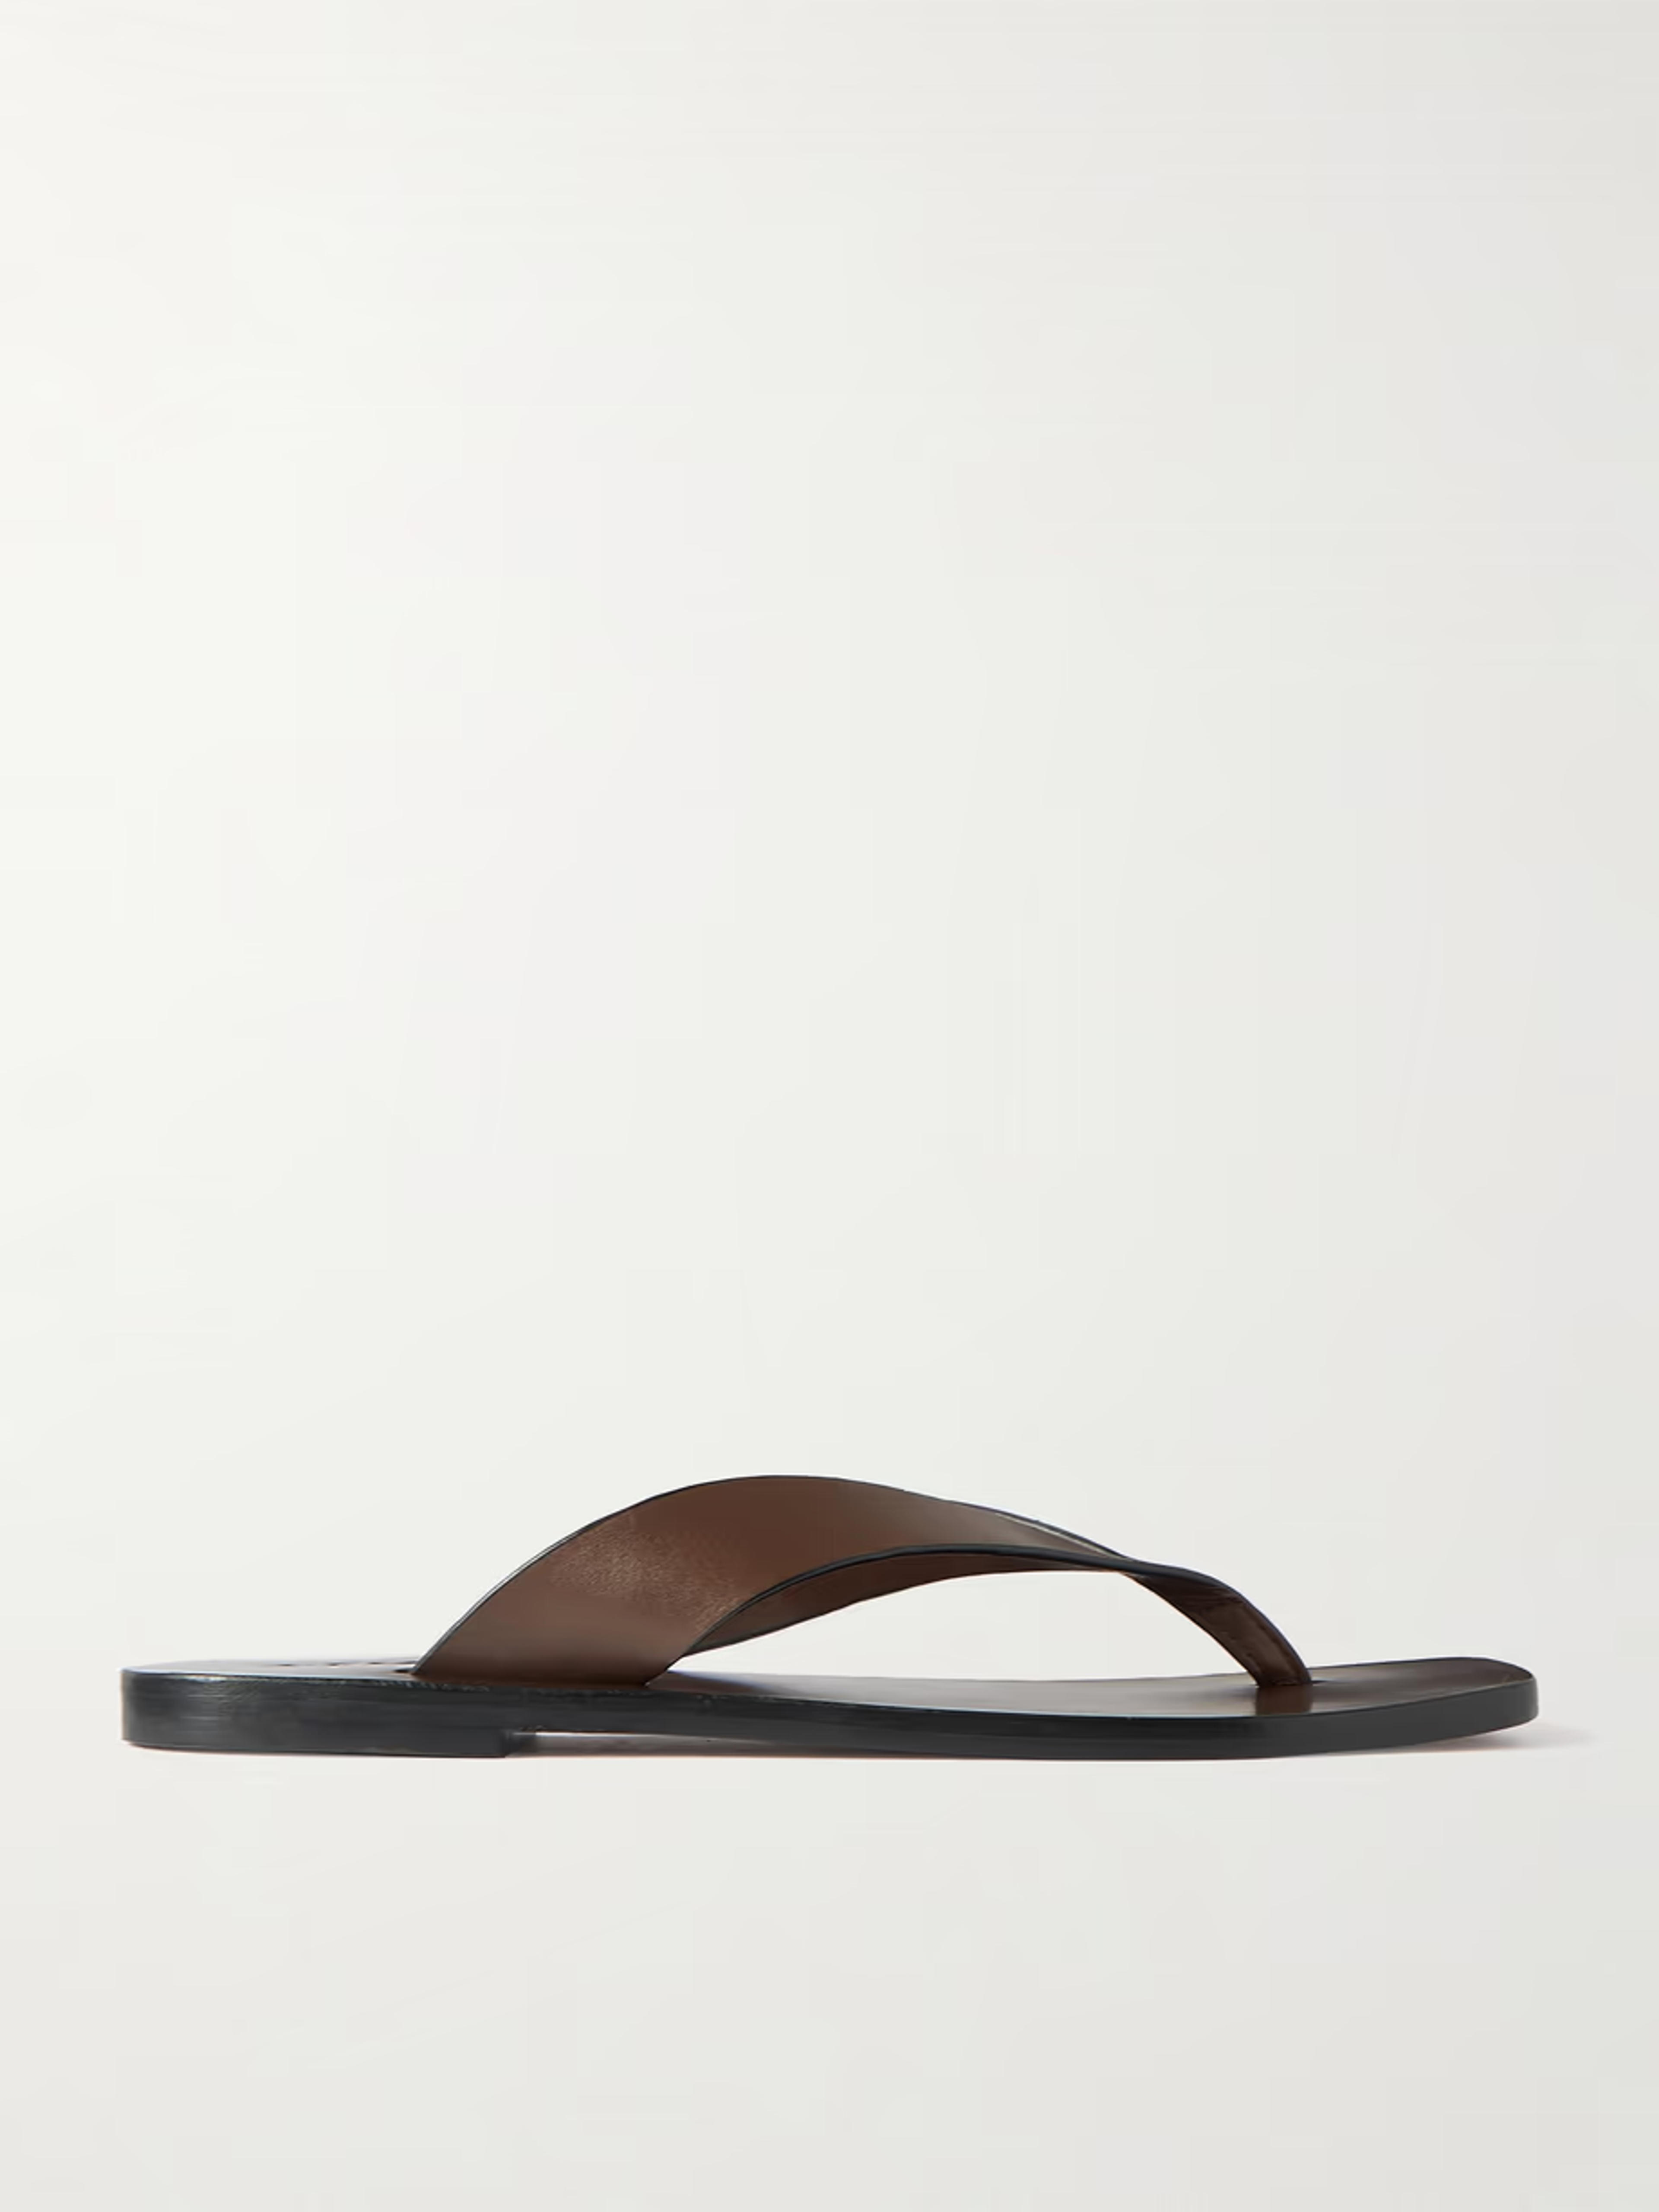 A.EMERY Kinto leather sandals | NET-A-PORTER